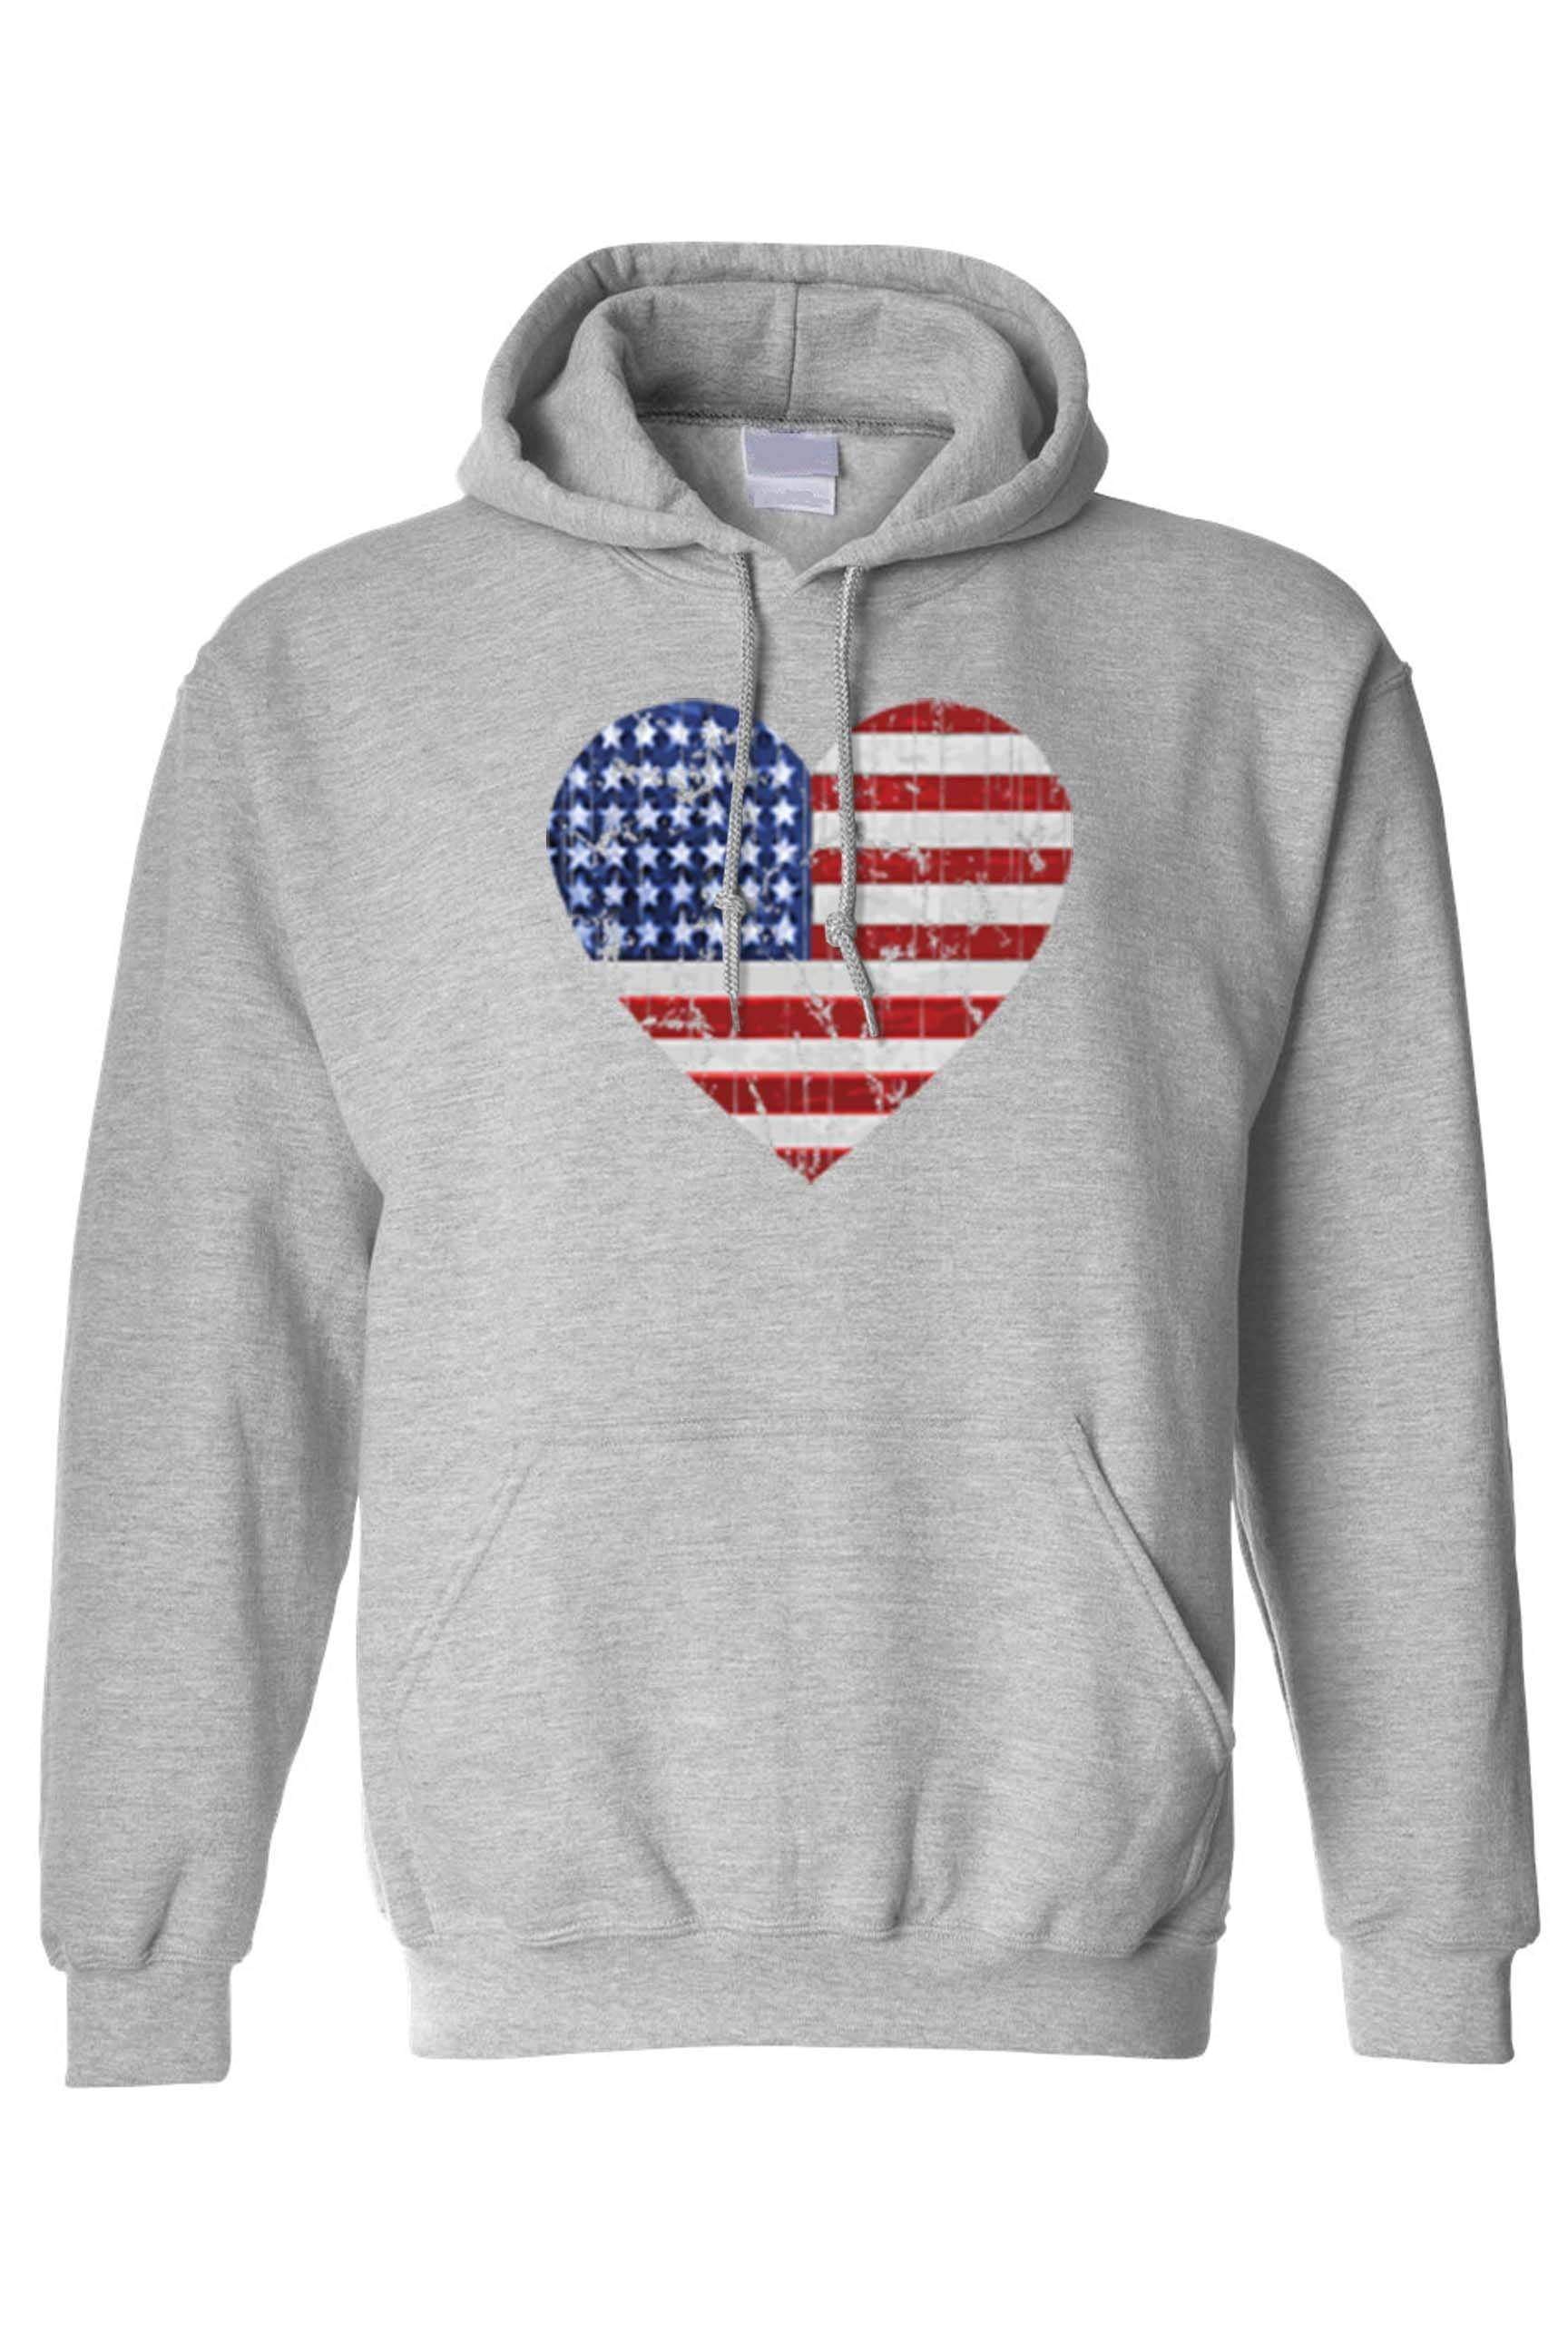 Men's/Unisex Pullover USA Flag  Hoodie